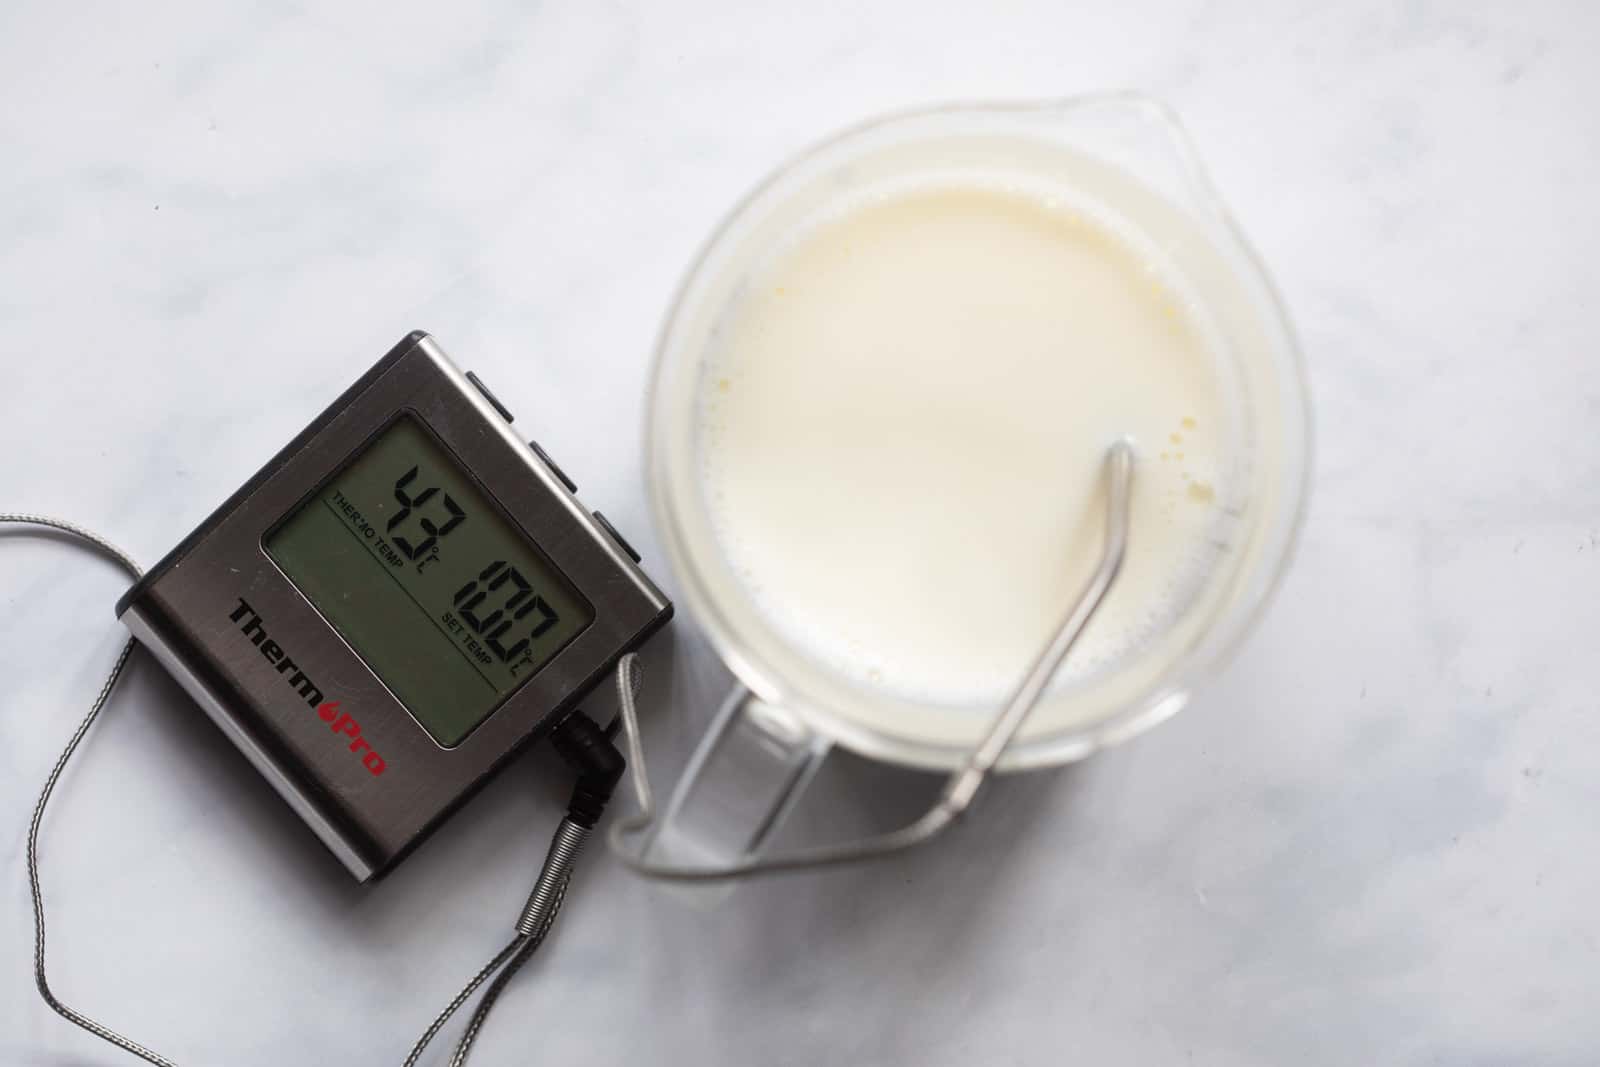 Temperature of the milk optimum for setting yogurt